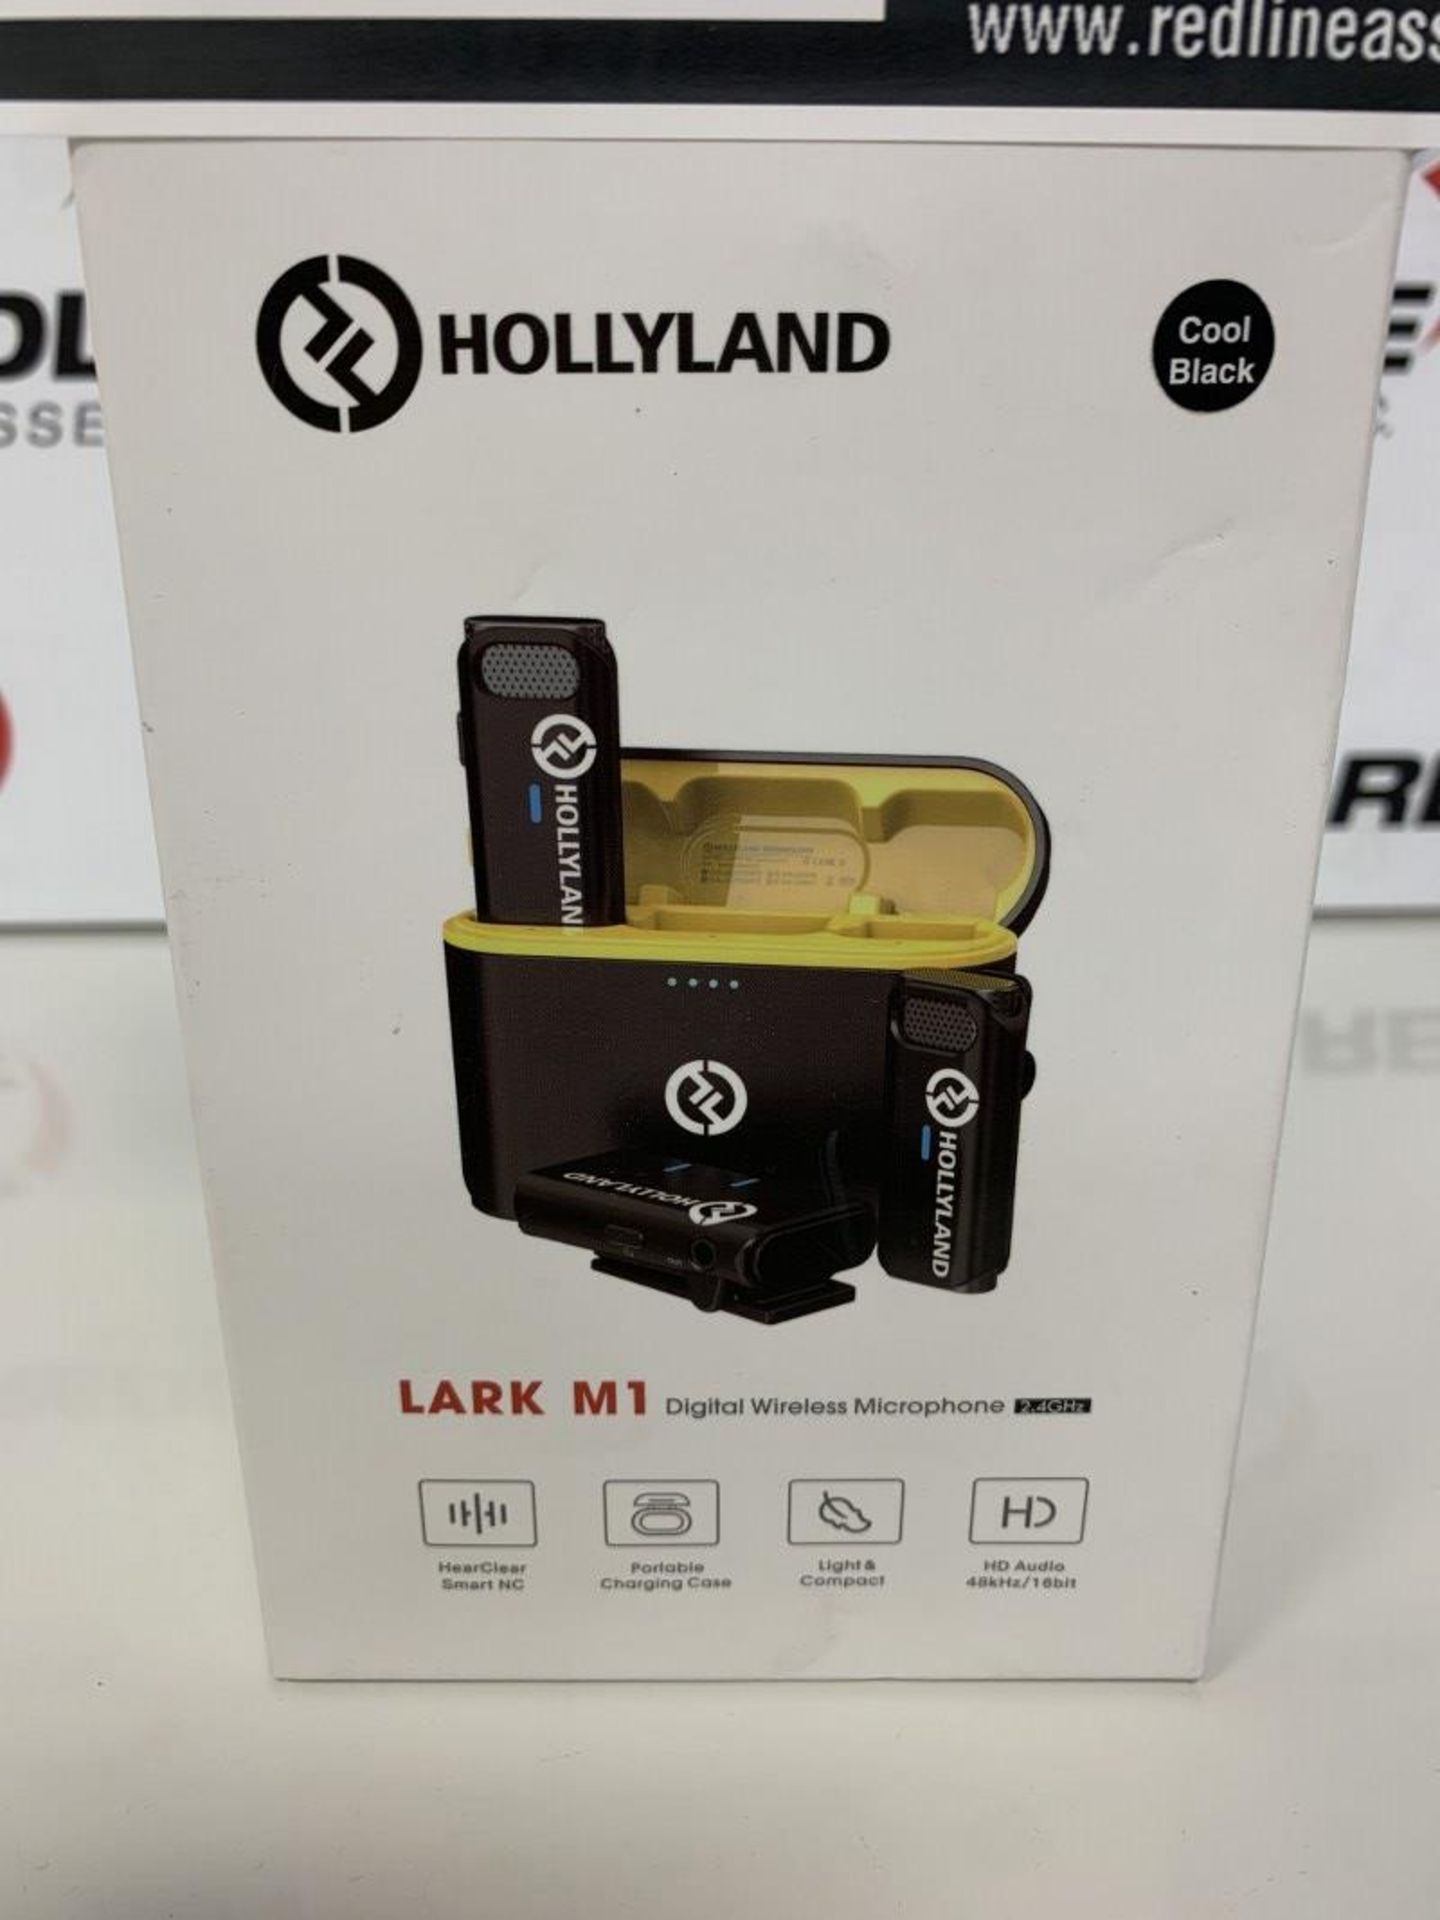 Hollyland - Lark M1 - Digital Wireless Microphone - Image 2 of 2